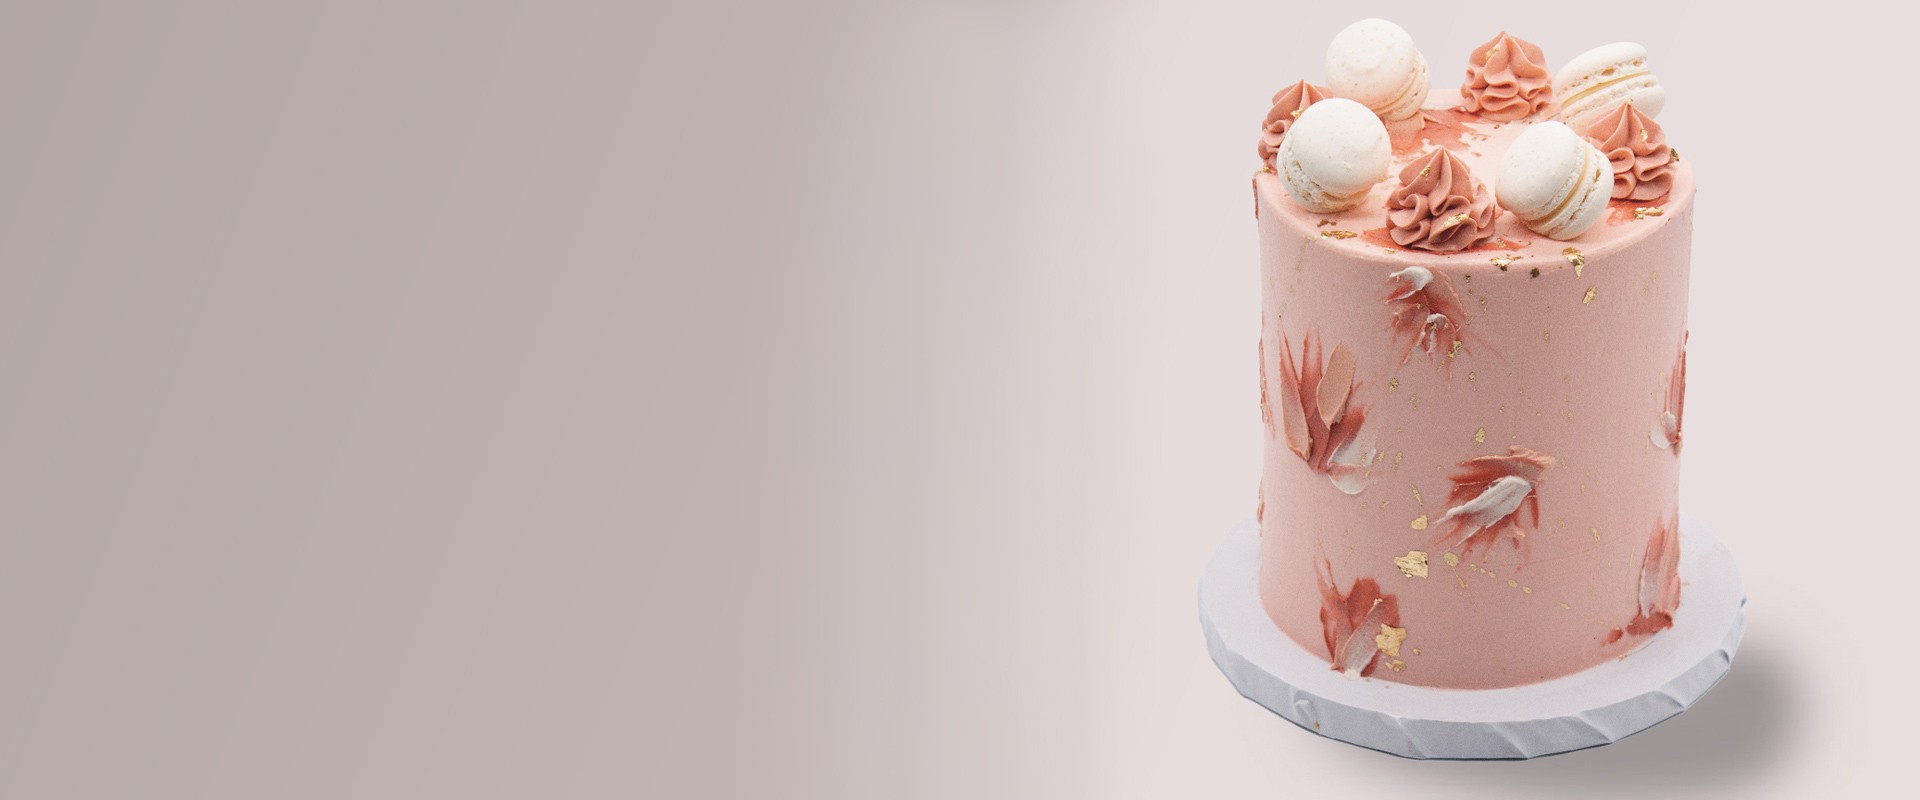 Base Wonky Small in polistirolo per torte e cake design - Polimatrix Shop